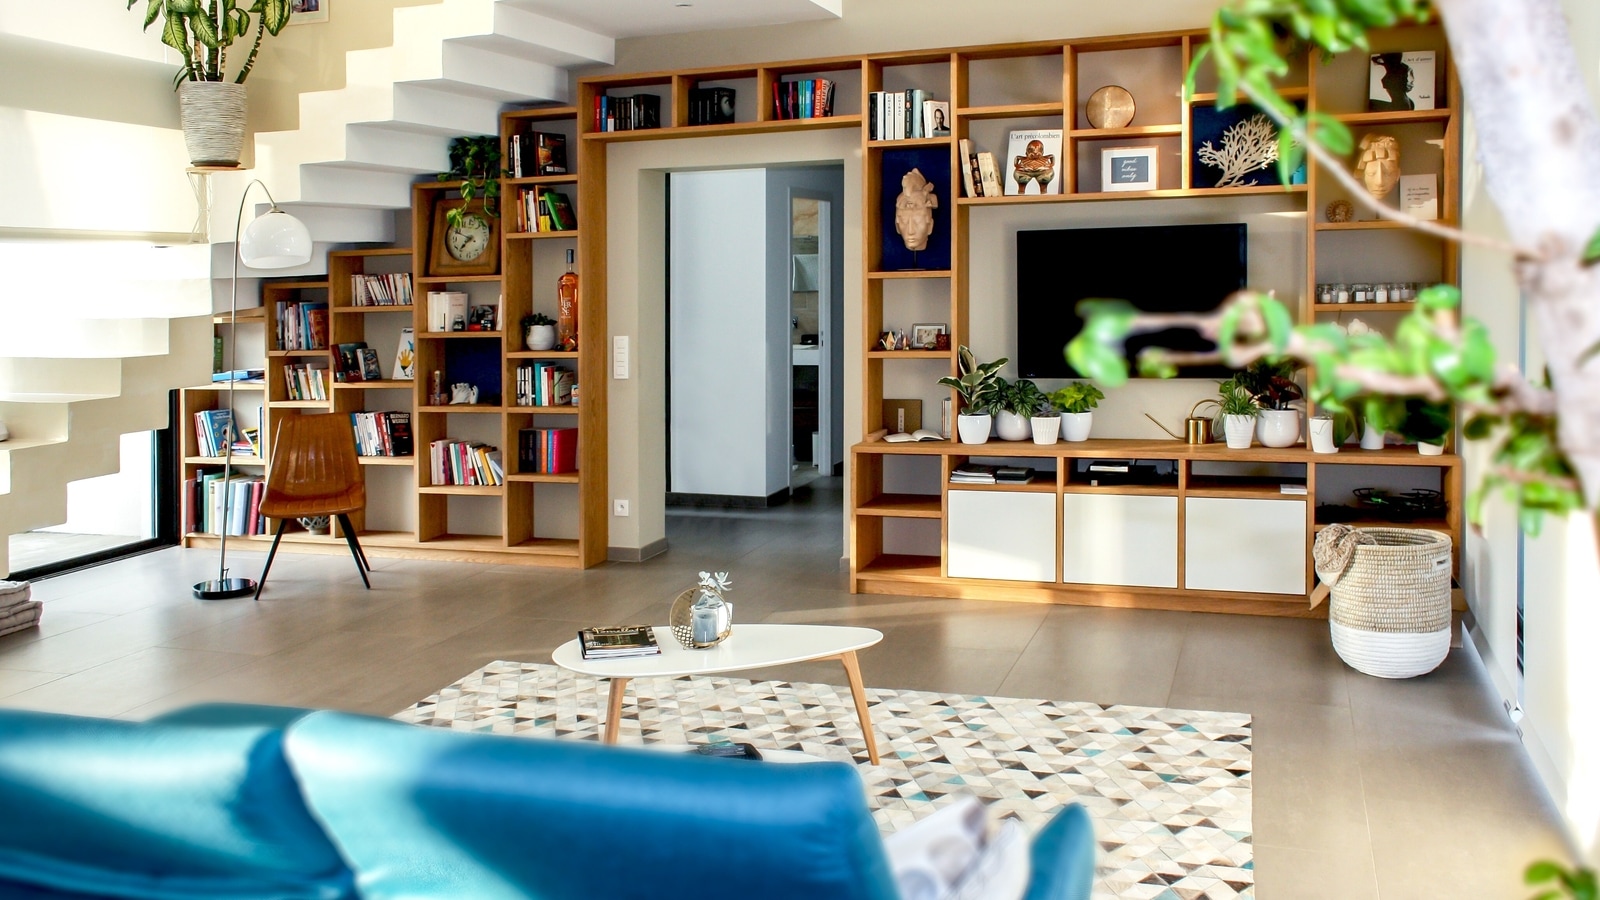 Home decor, interior design tips: Space saving ideas to turn house spacious - Hindustan Times